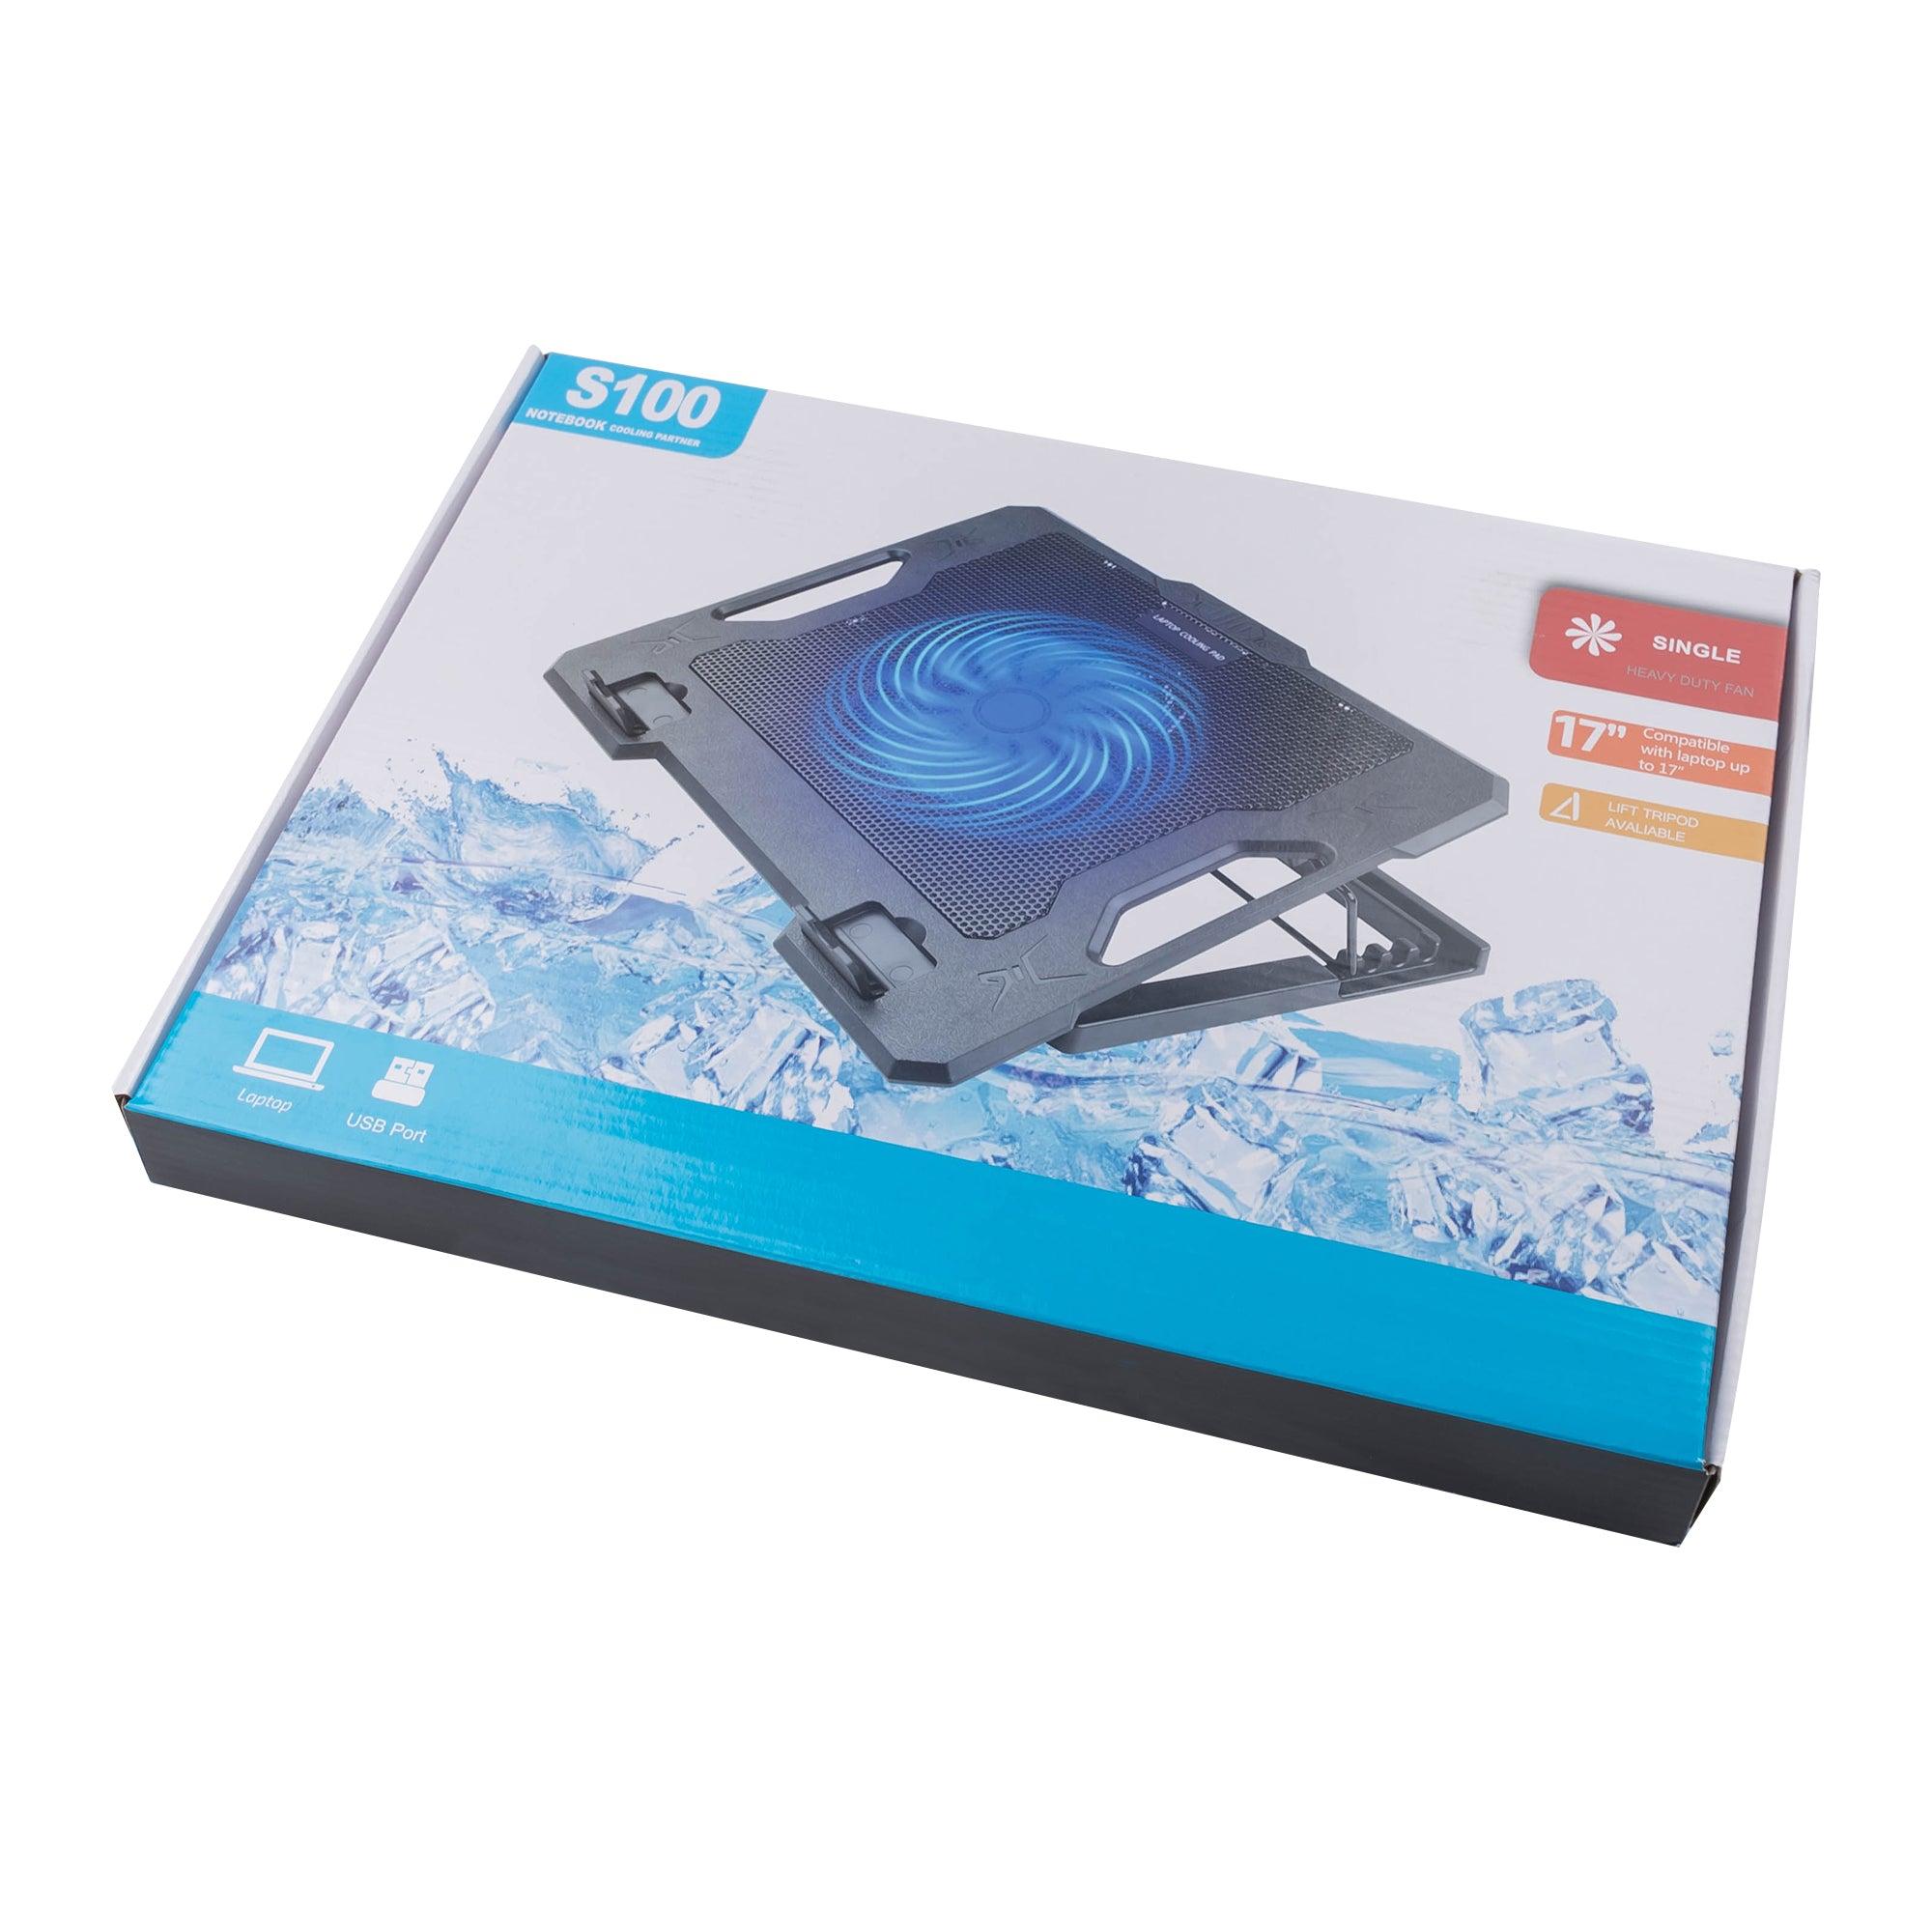 S100 Height Adjustable Notebook Gaming Fan Cooler Desktop Laptop Stand Cooling Pad - Blue Light